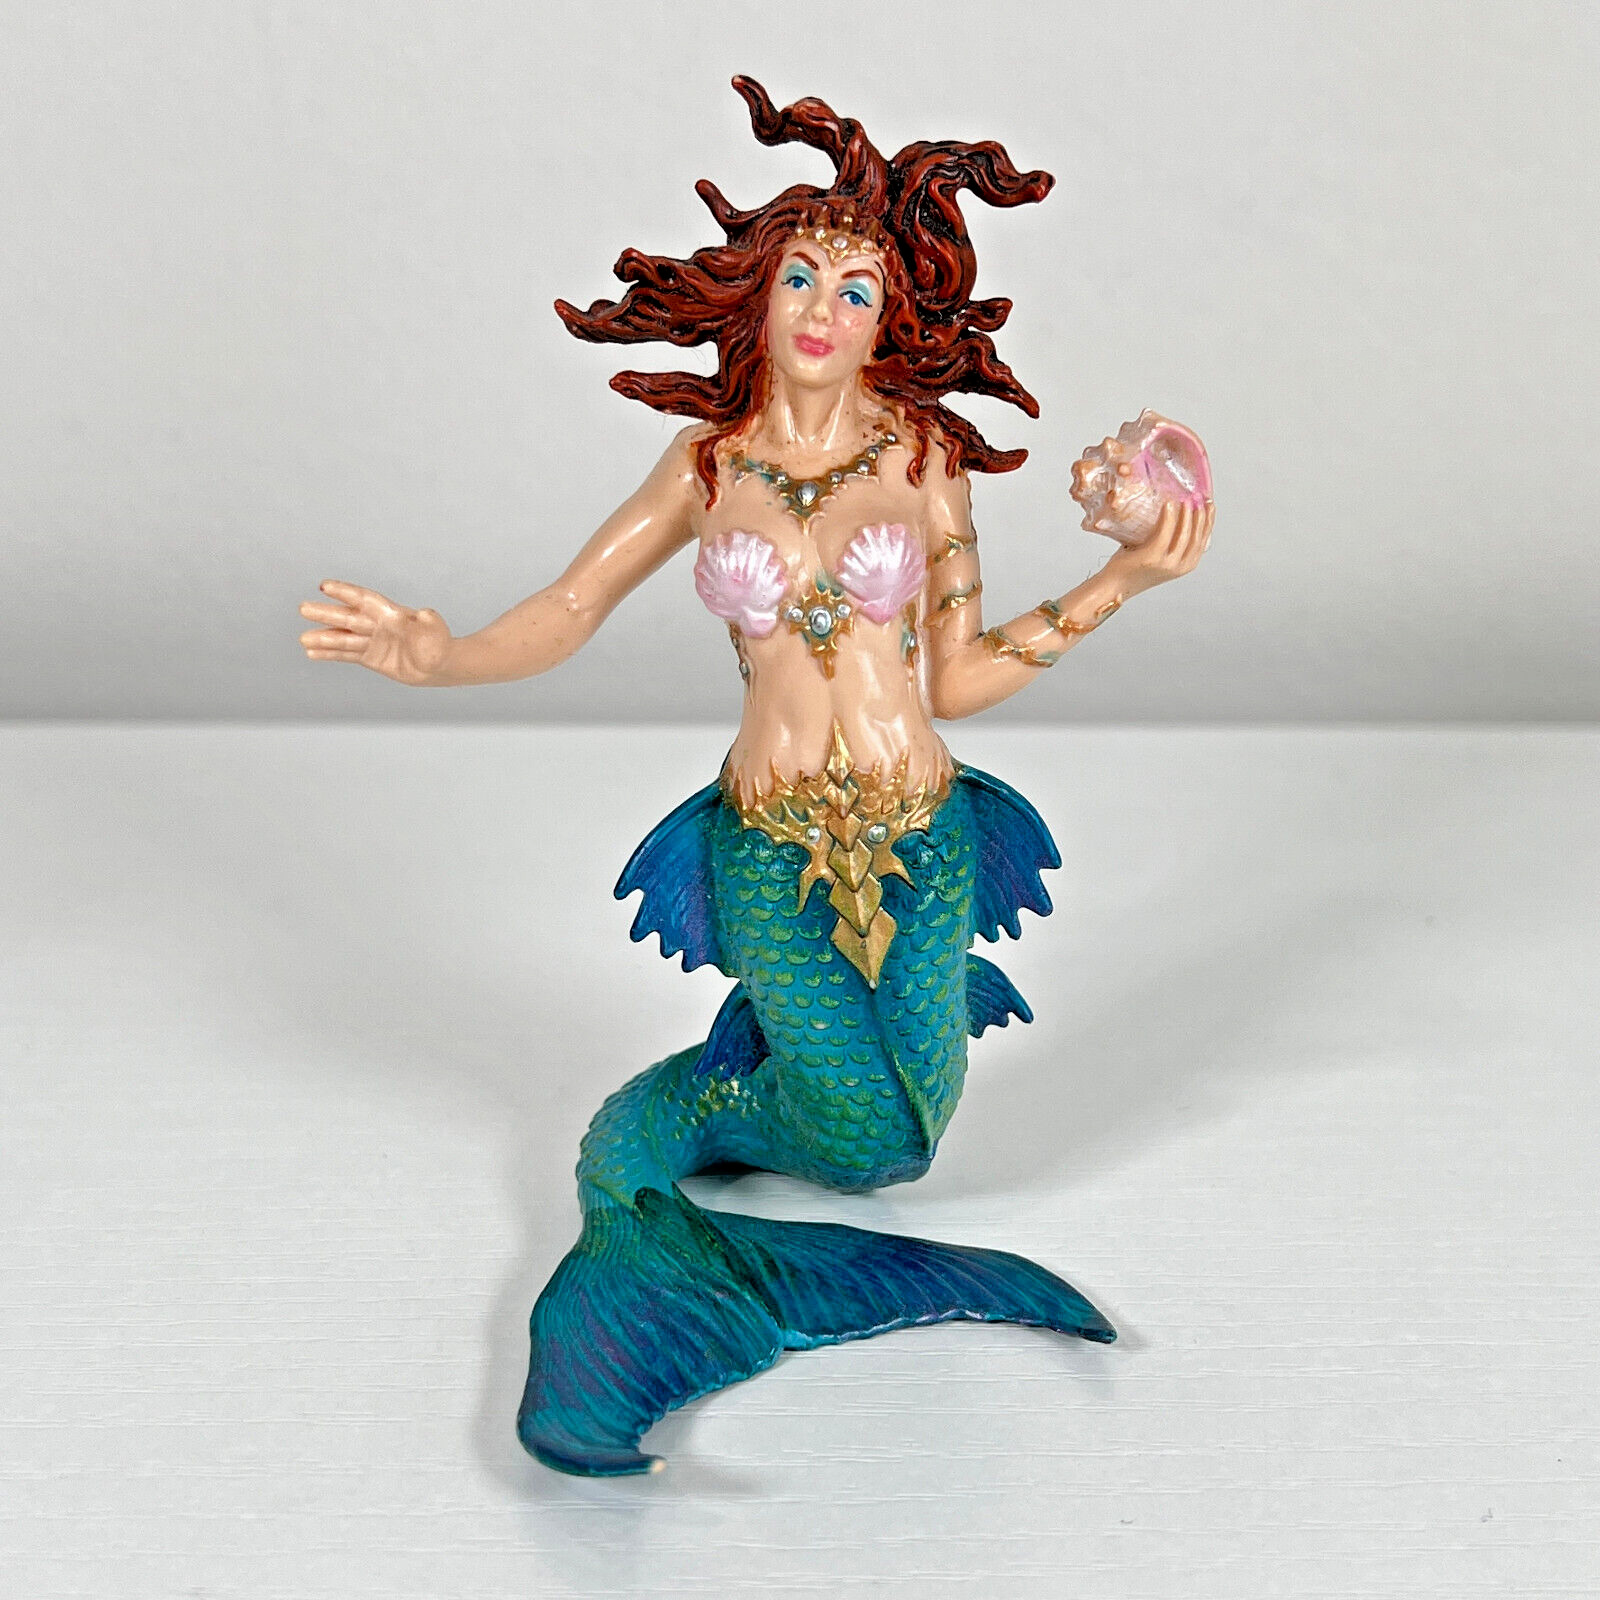 Mermaid from Safari Ltd - Mythical Realms Toy - Greek, Roman Mythology 800929